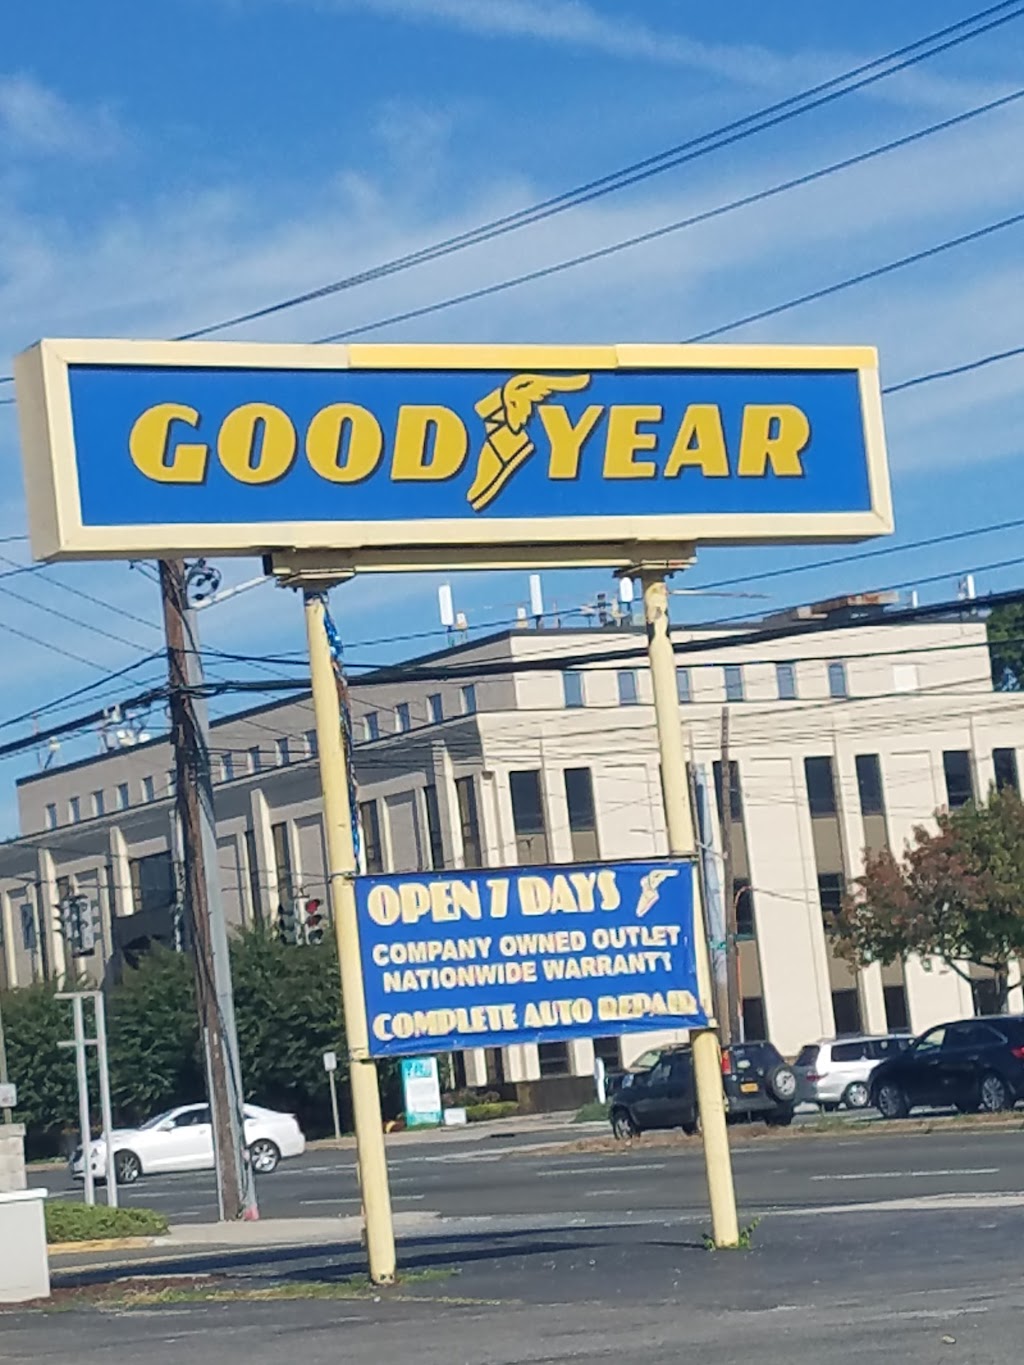 Goodyear Auto Service | 336 N Broadway, Jericho, NY 11753 | Phone: (516) 433-7730